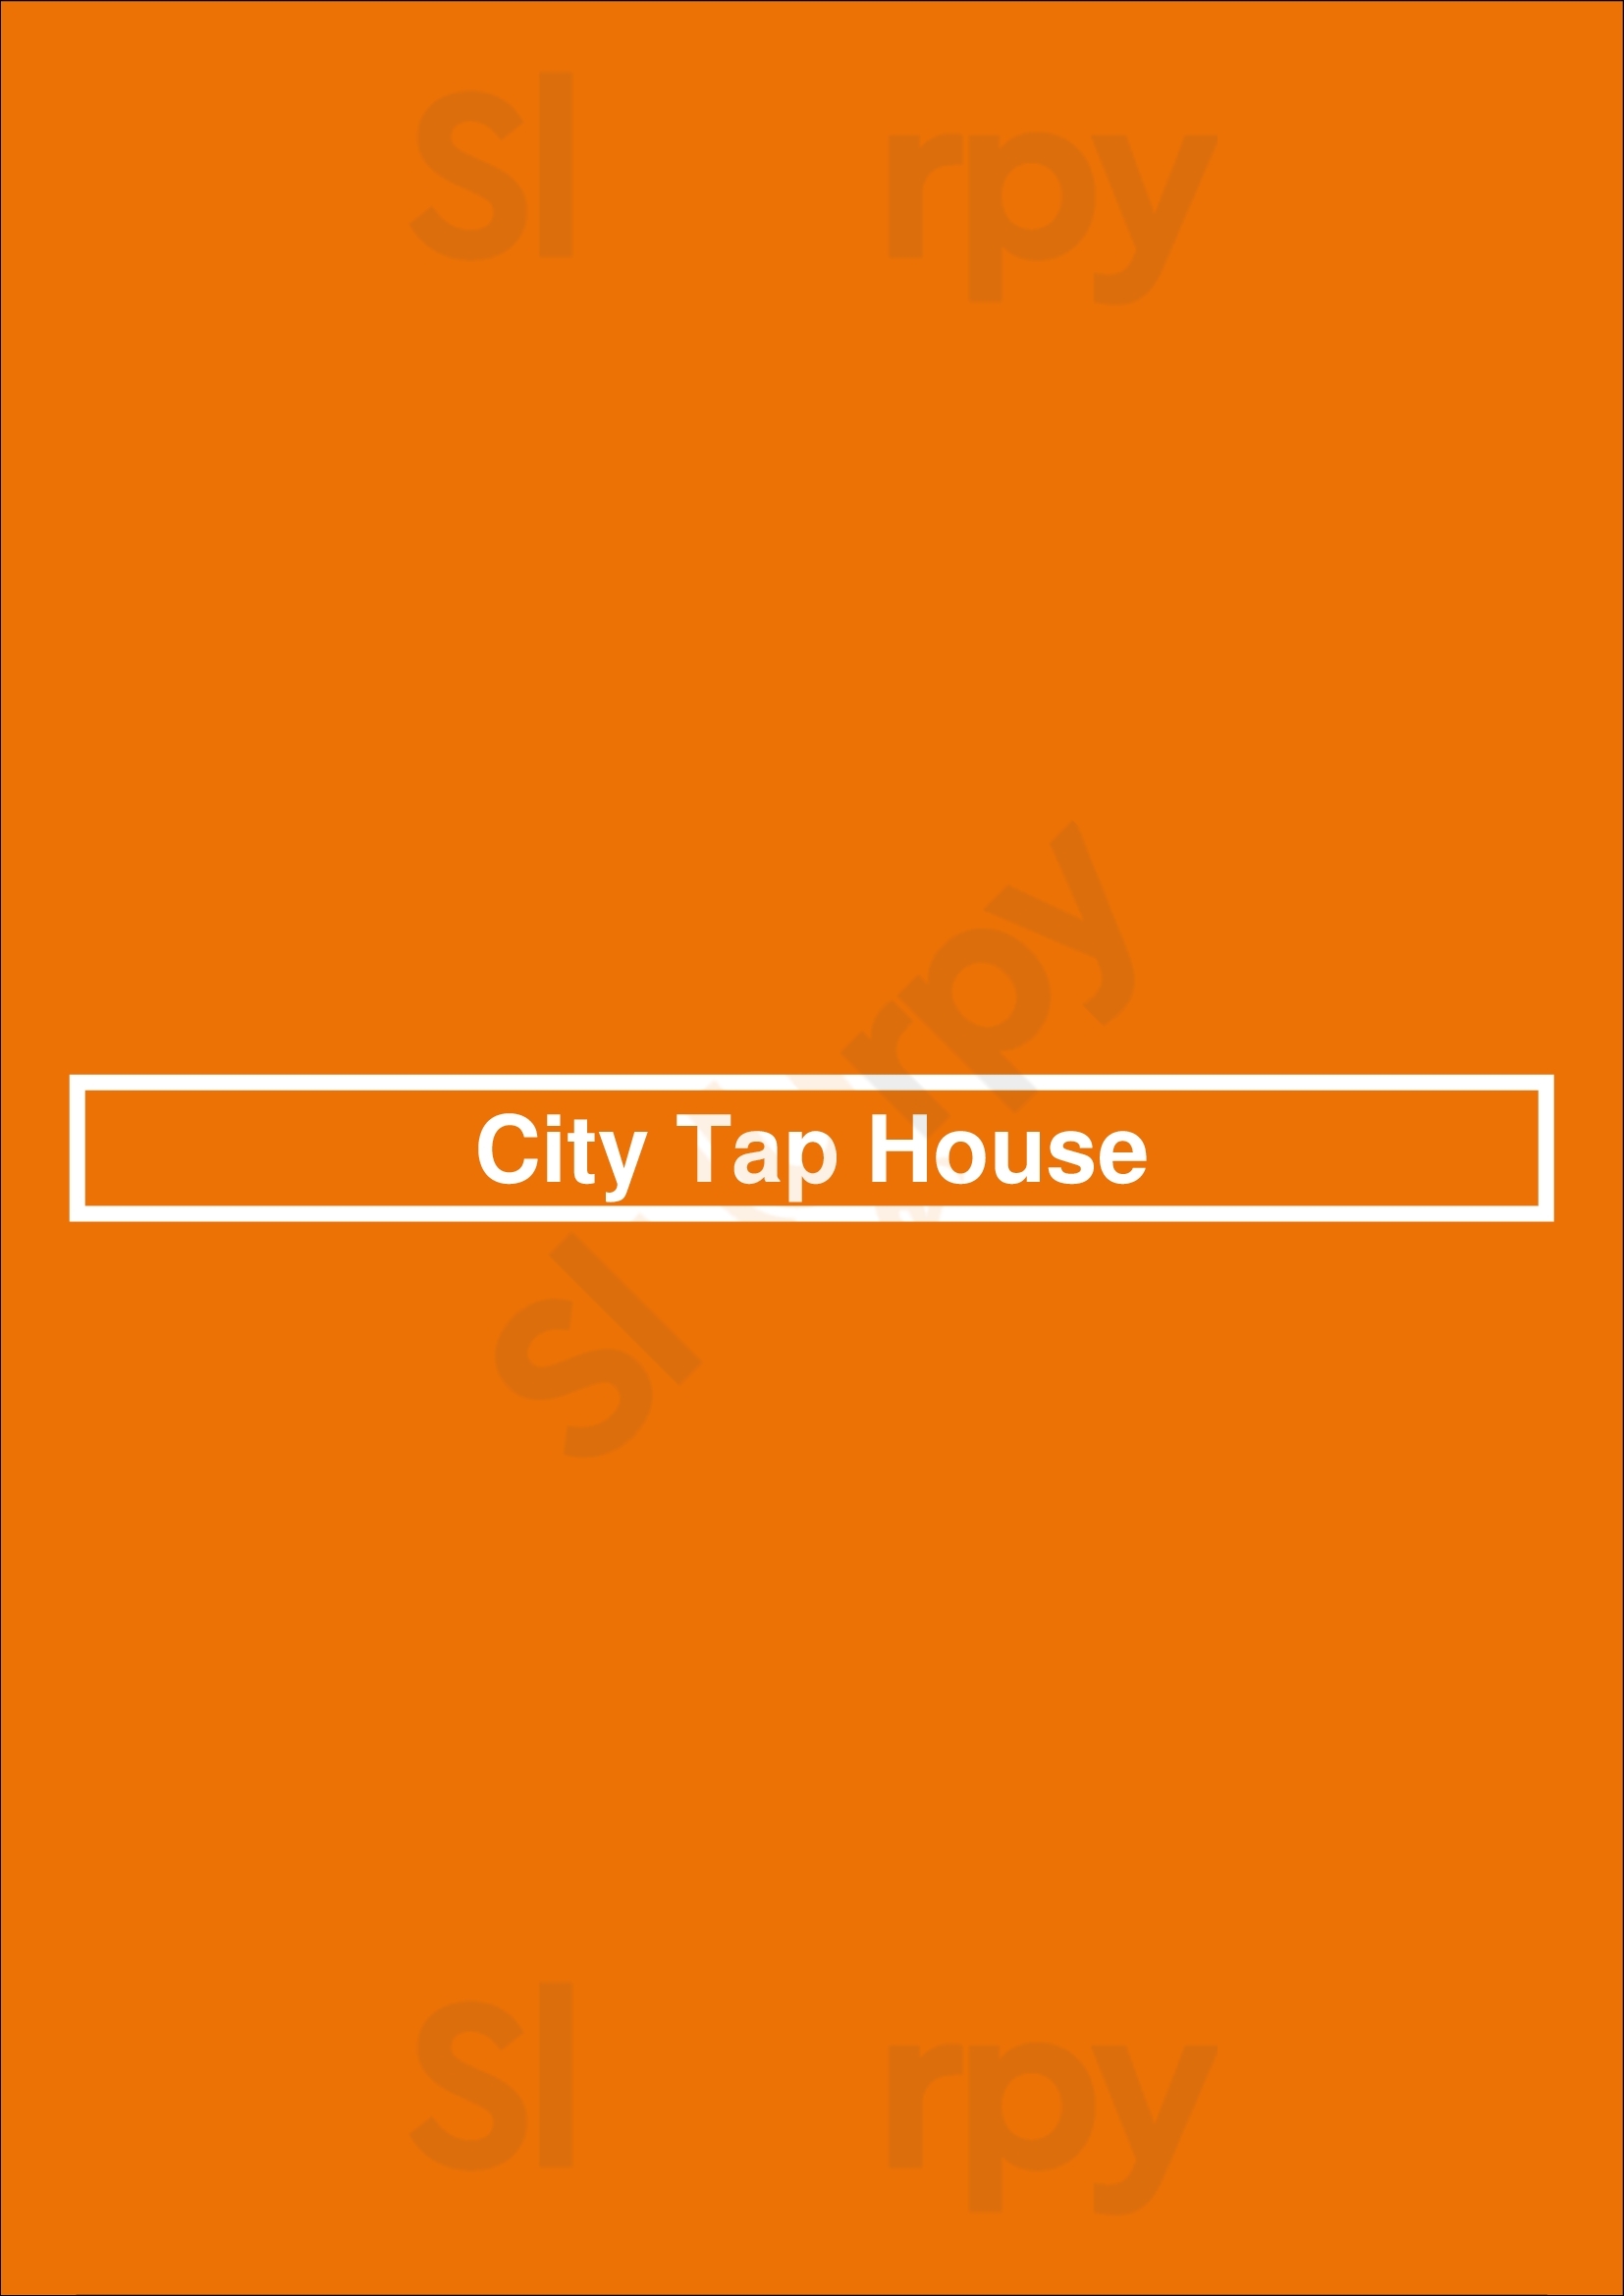 City Tap House Nashville Menu - 1